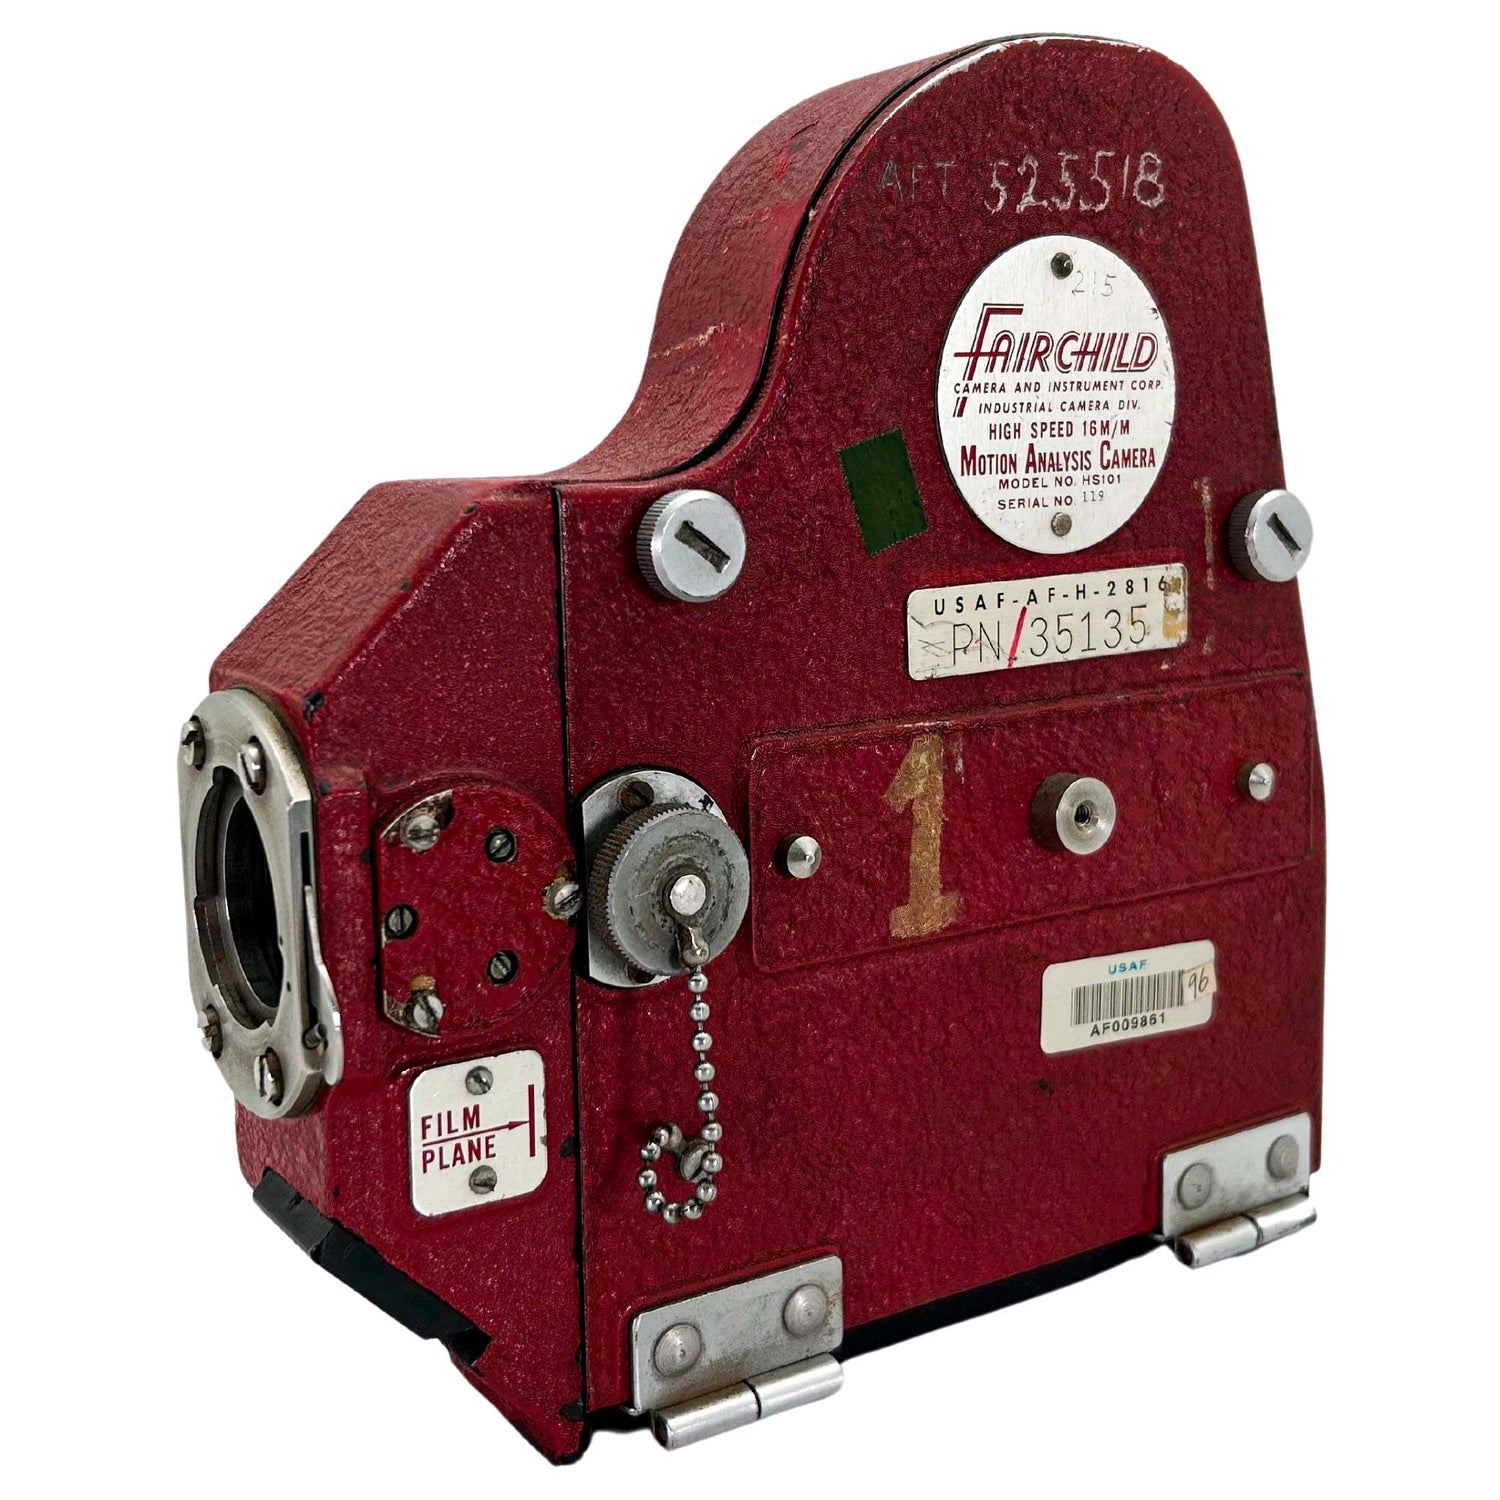 Vintage Fair Child High Speed 16MM Motion Analysis Camera Text